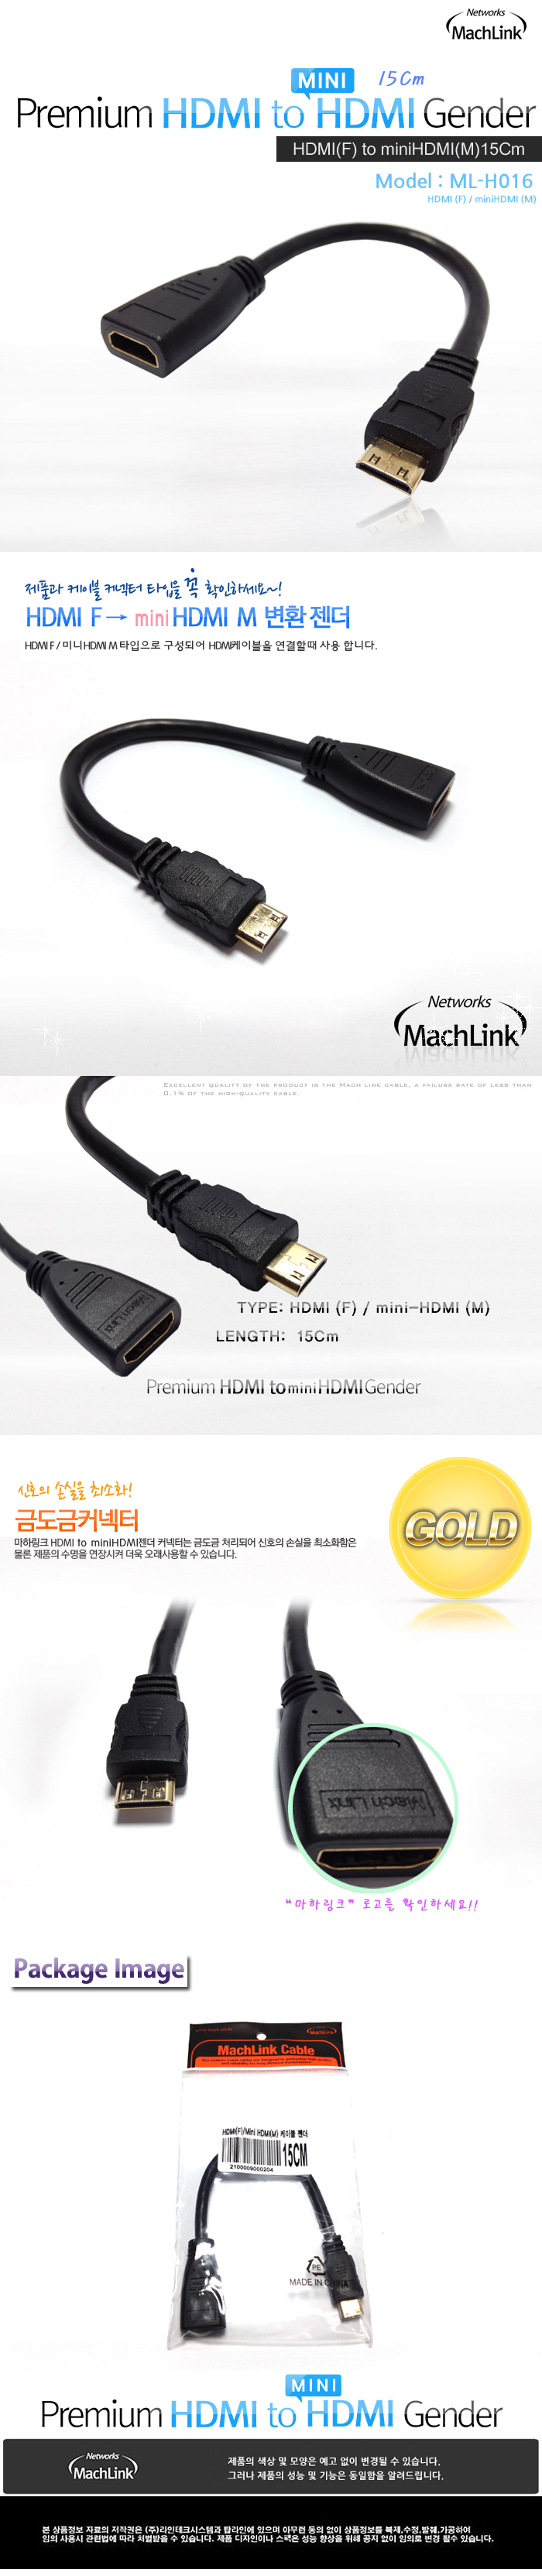 HDMI F-miniHDMI M 15cm .jpg